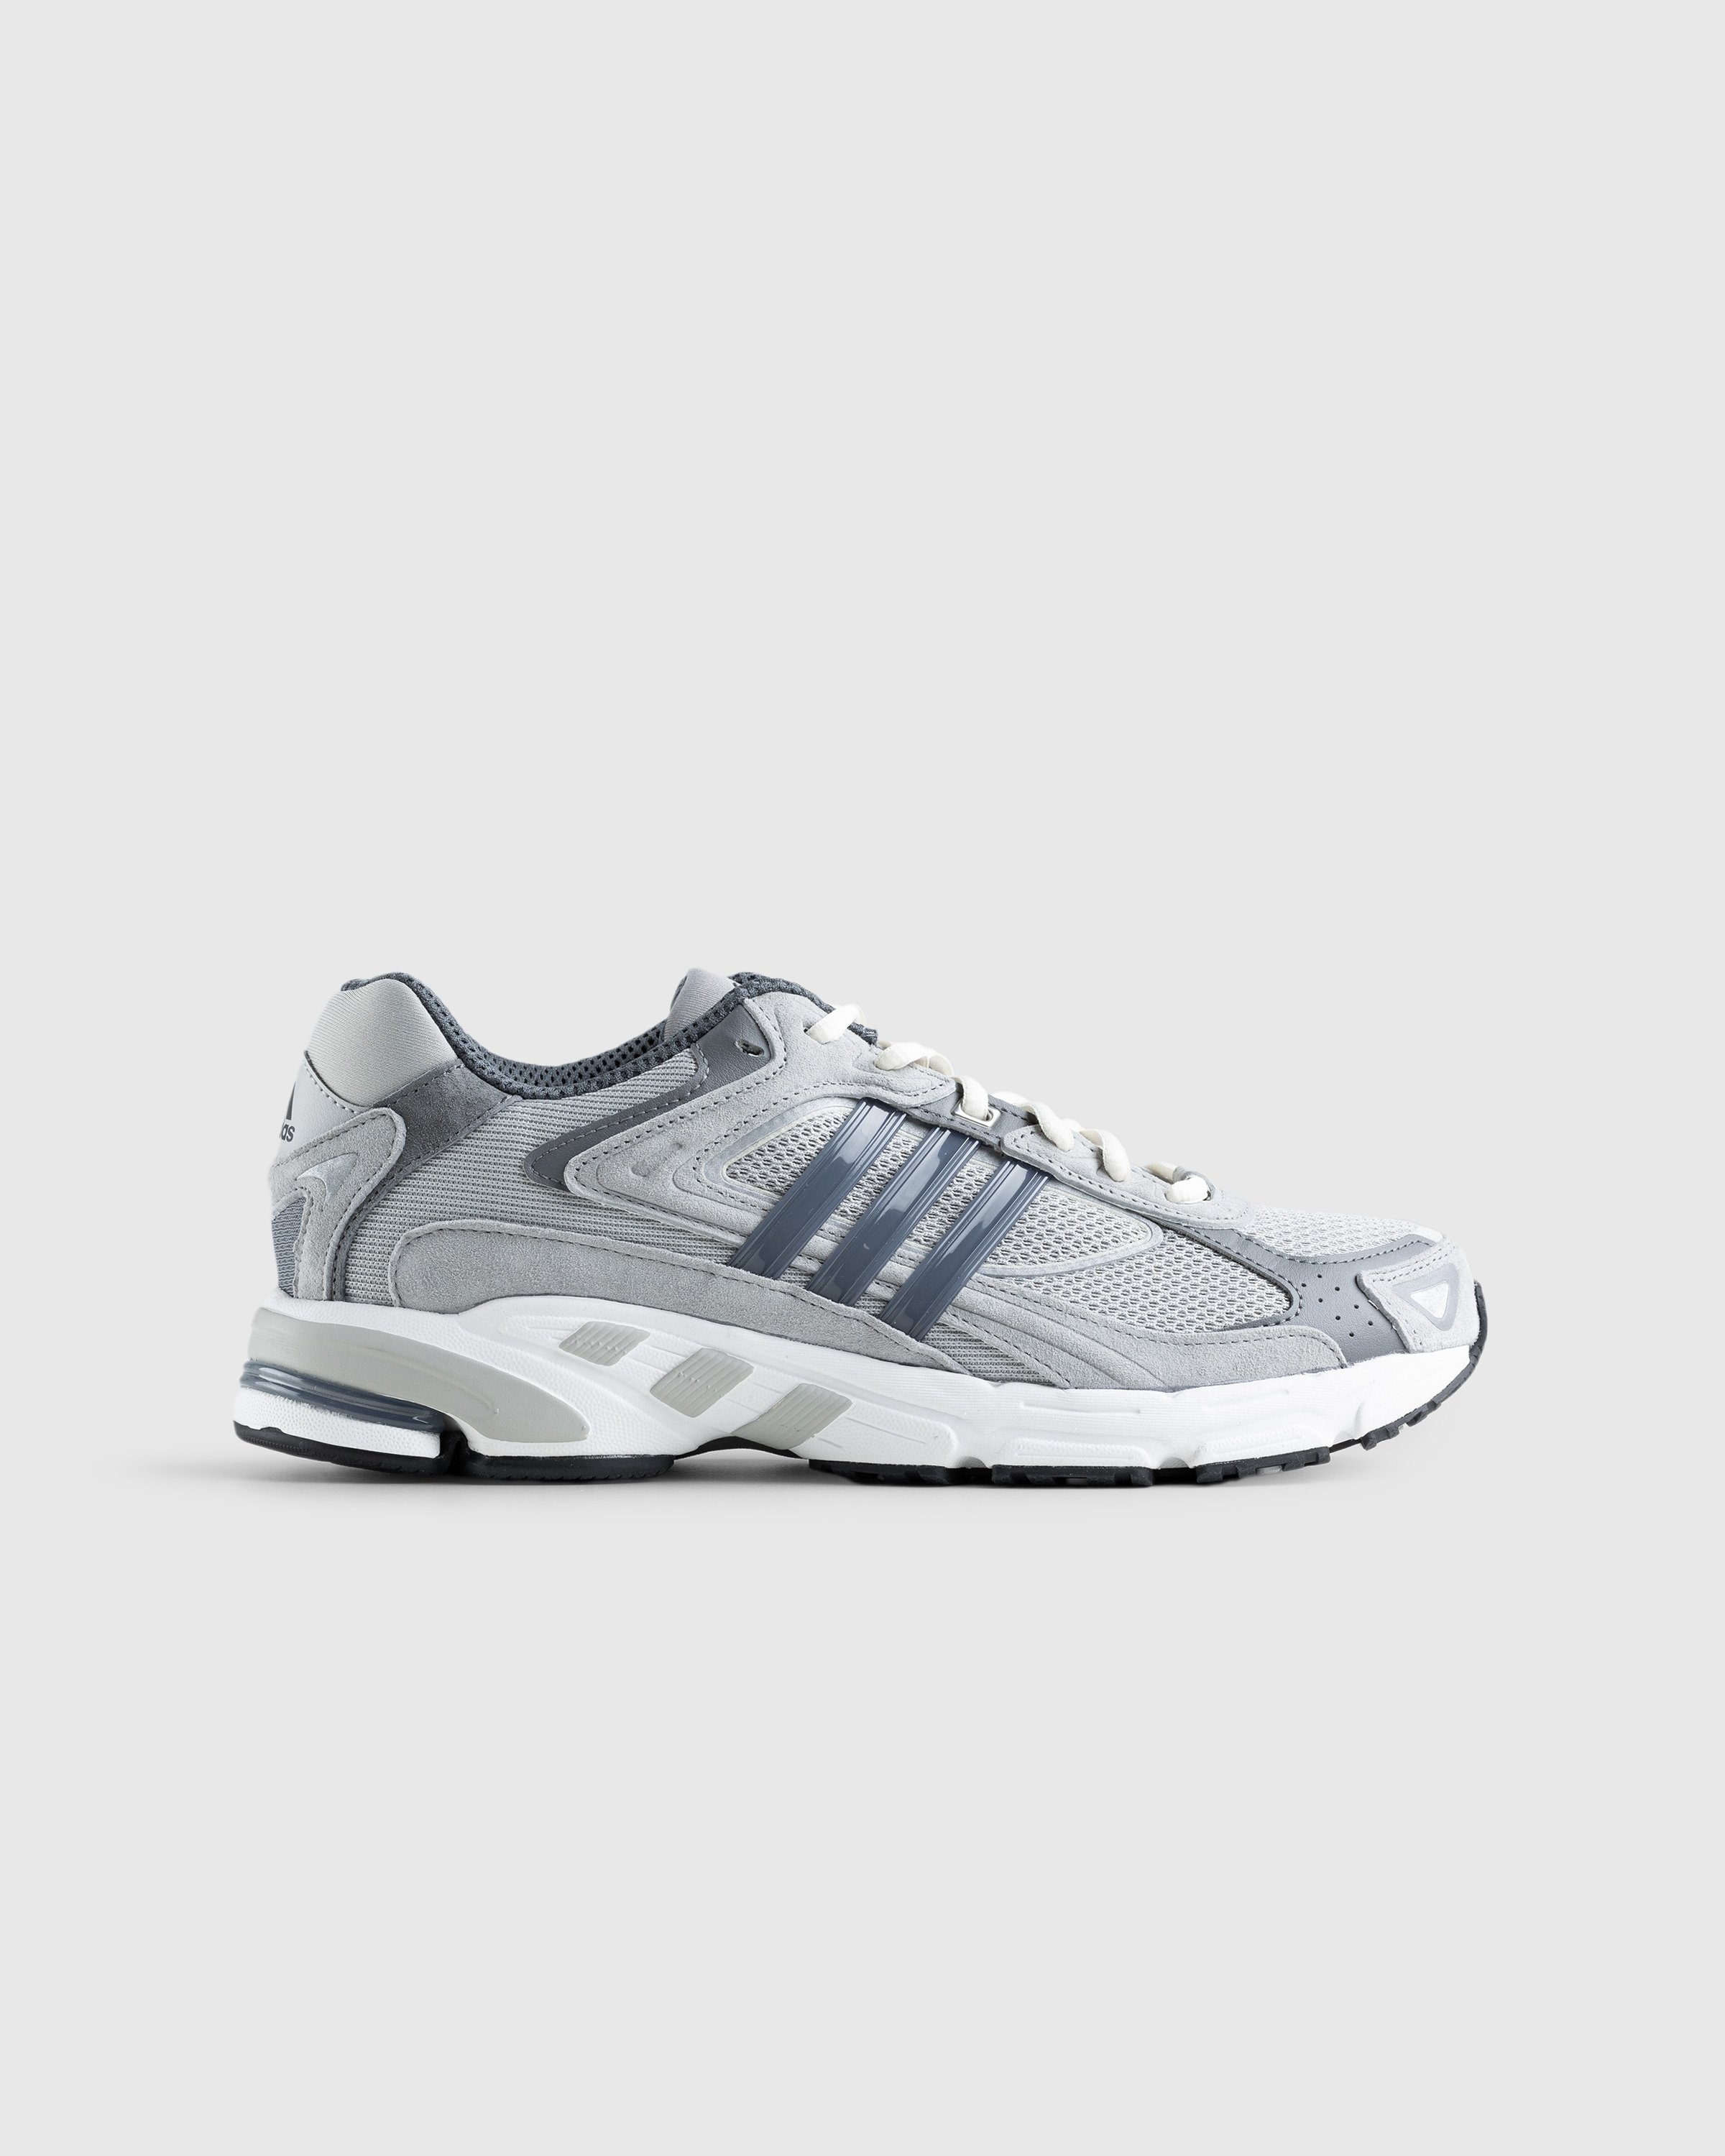 Adidas – Response CL Grey | Highsnobiety Shop